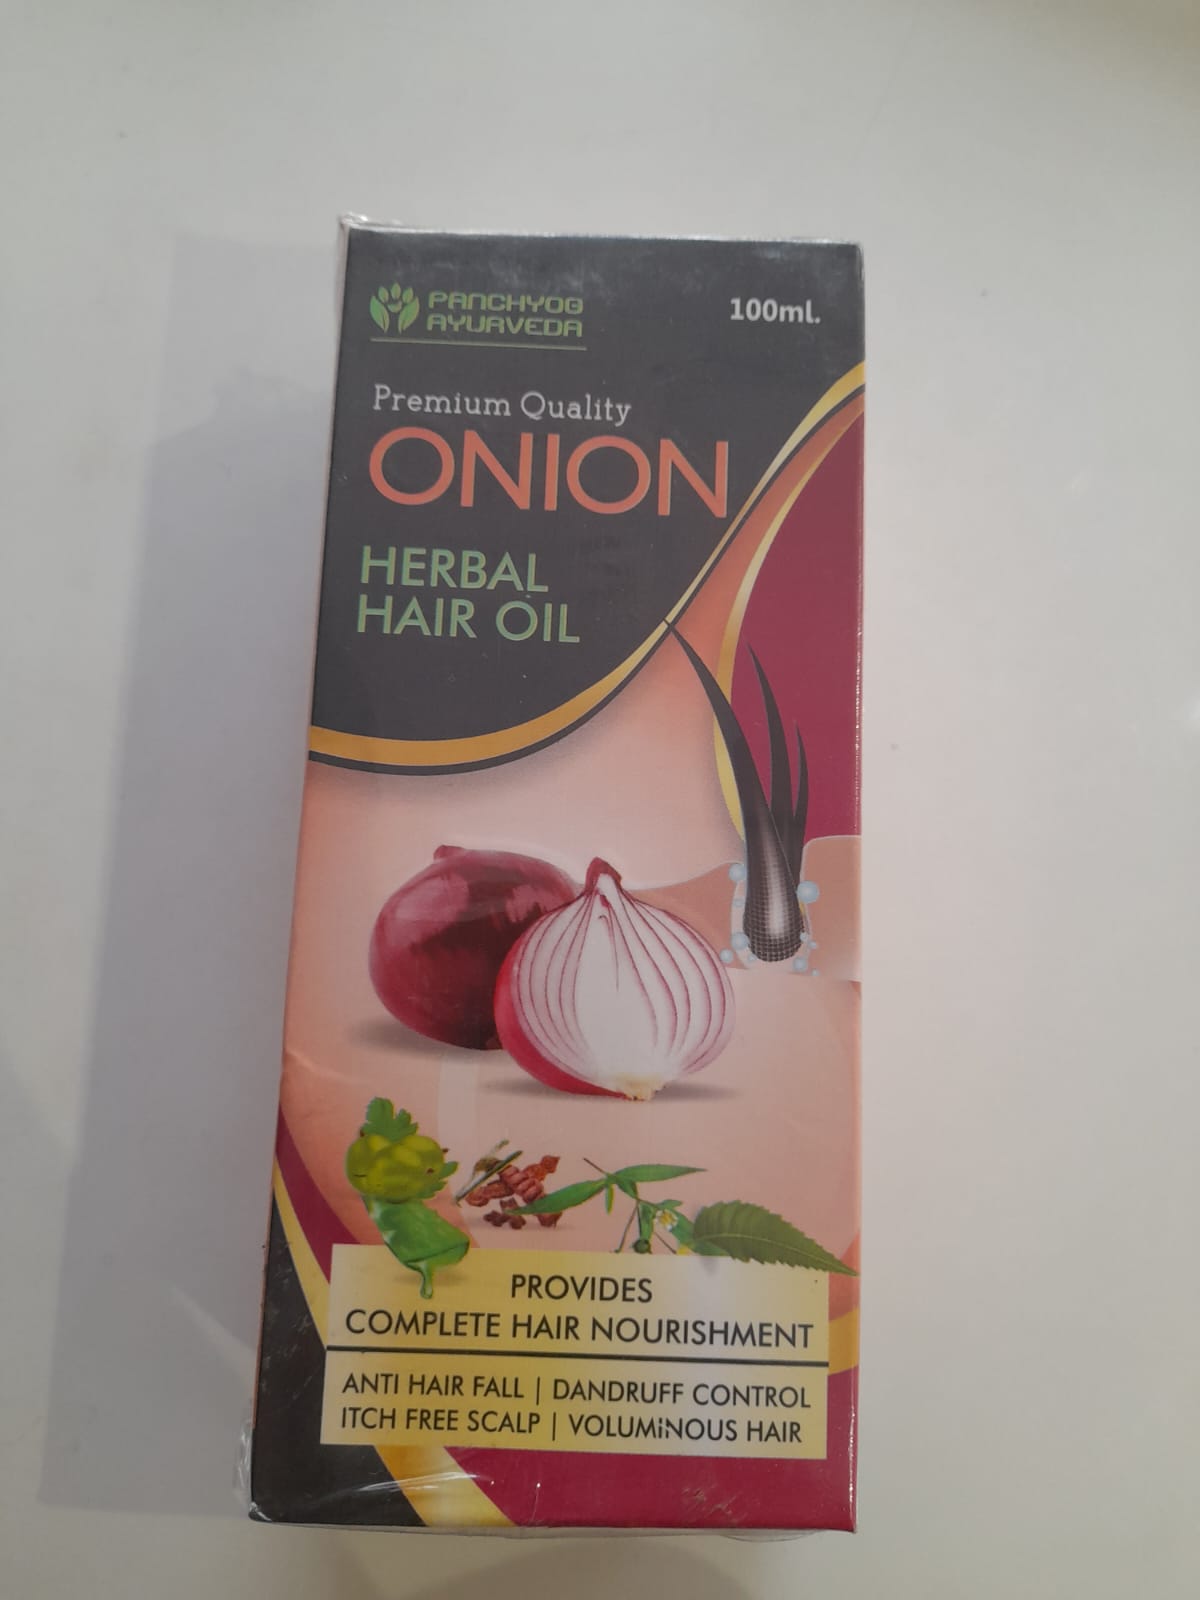 Panchyog Ayurveda Onion Herbal Hair Oil